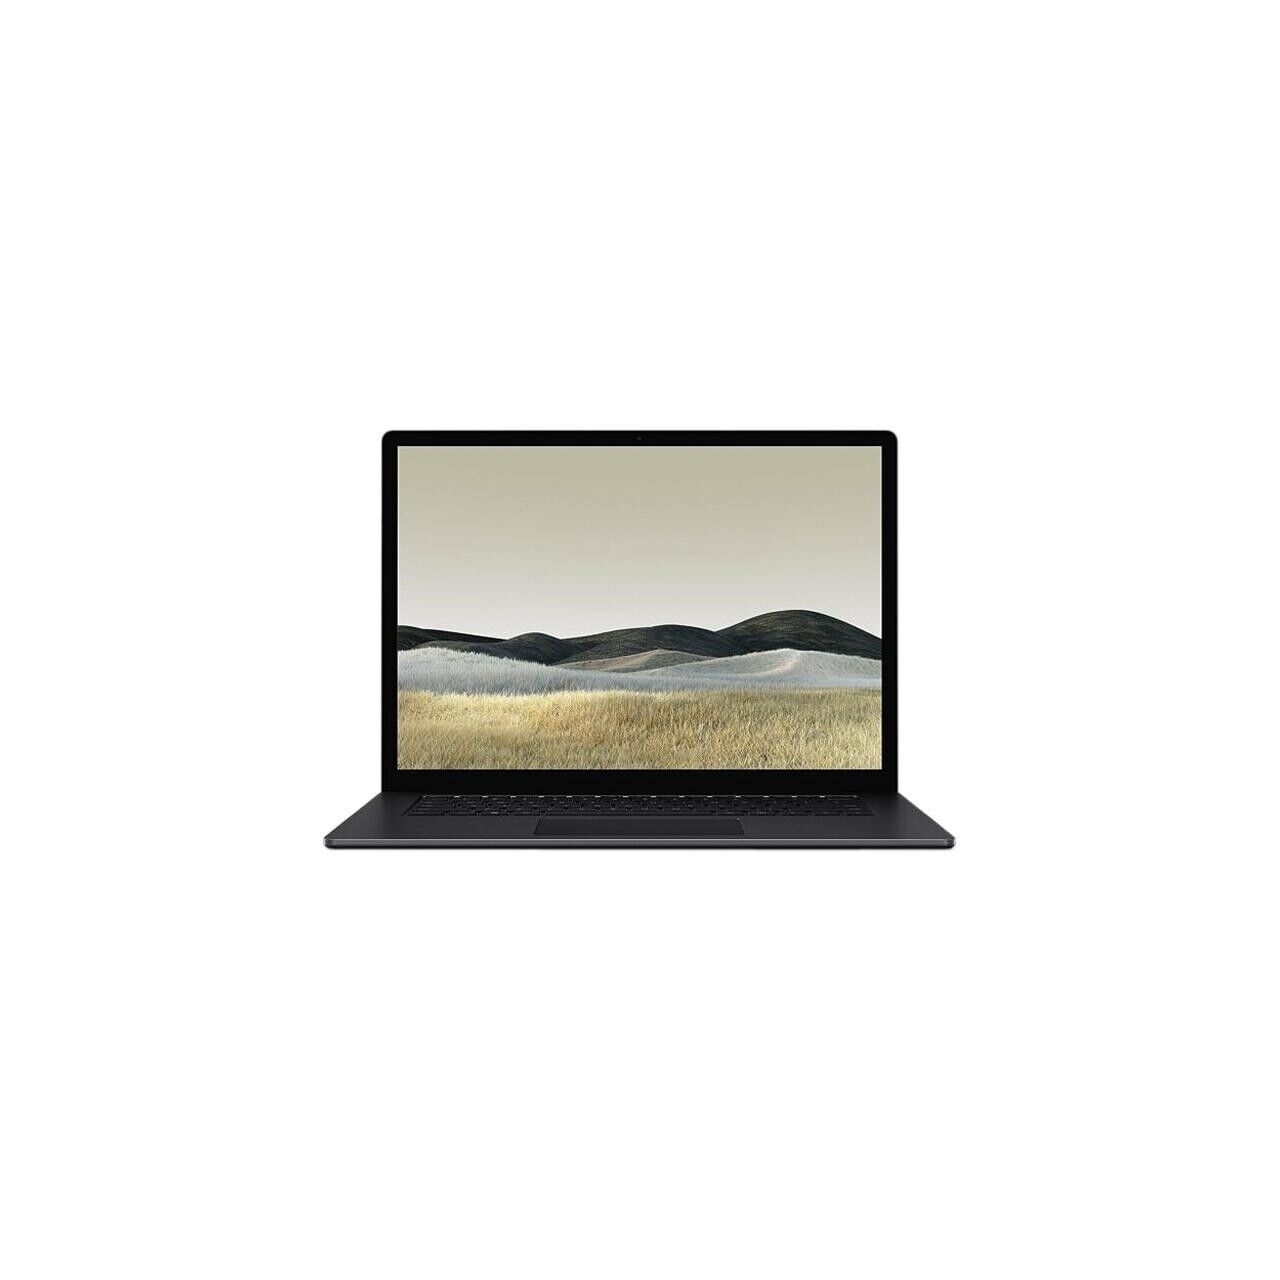 Microsoft Surface Laptop 3 15" 256GB i7-1065G7, Black